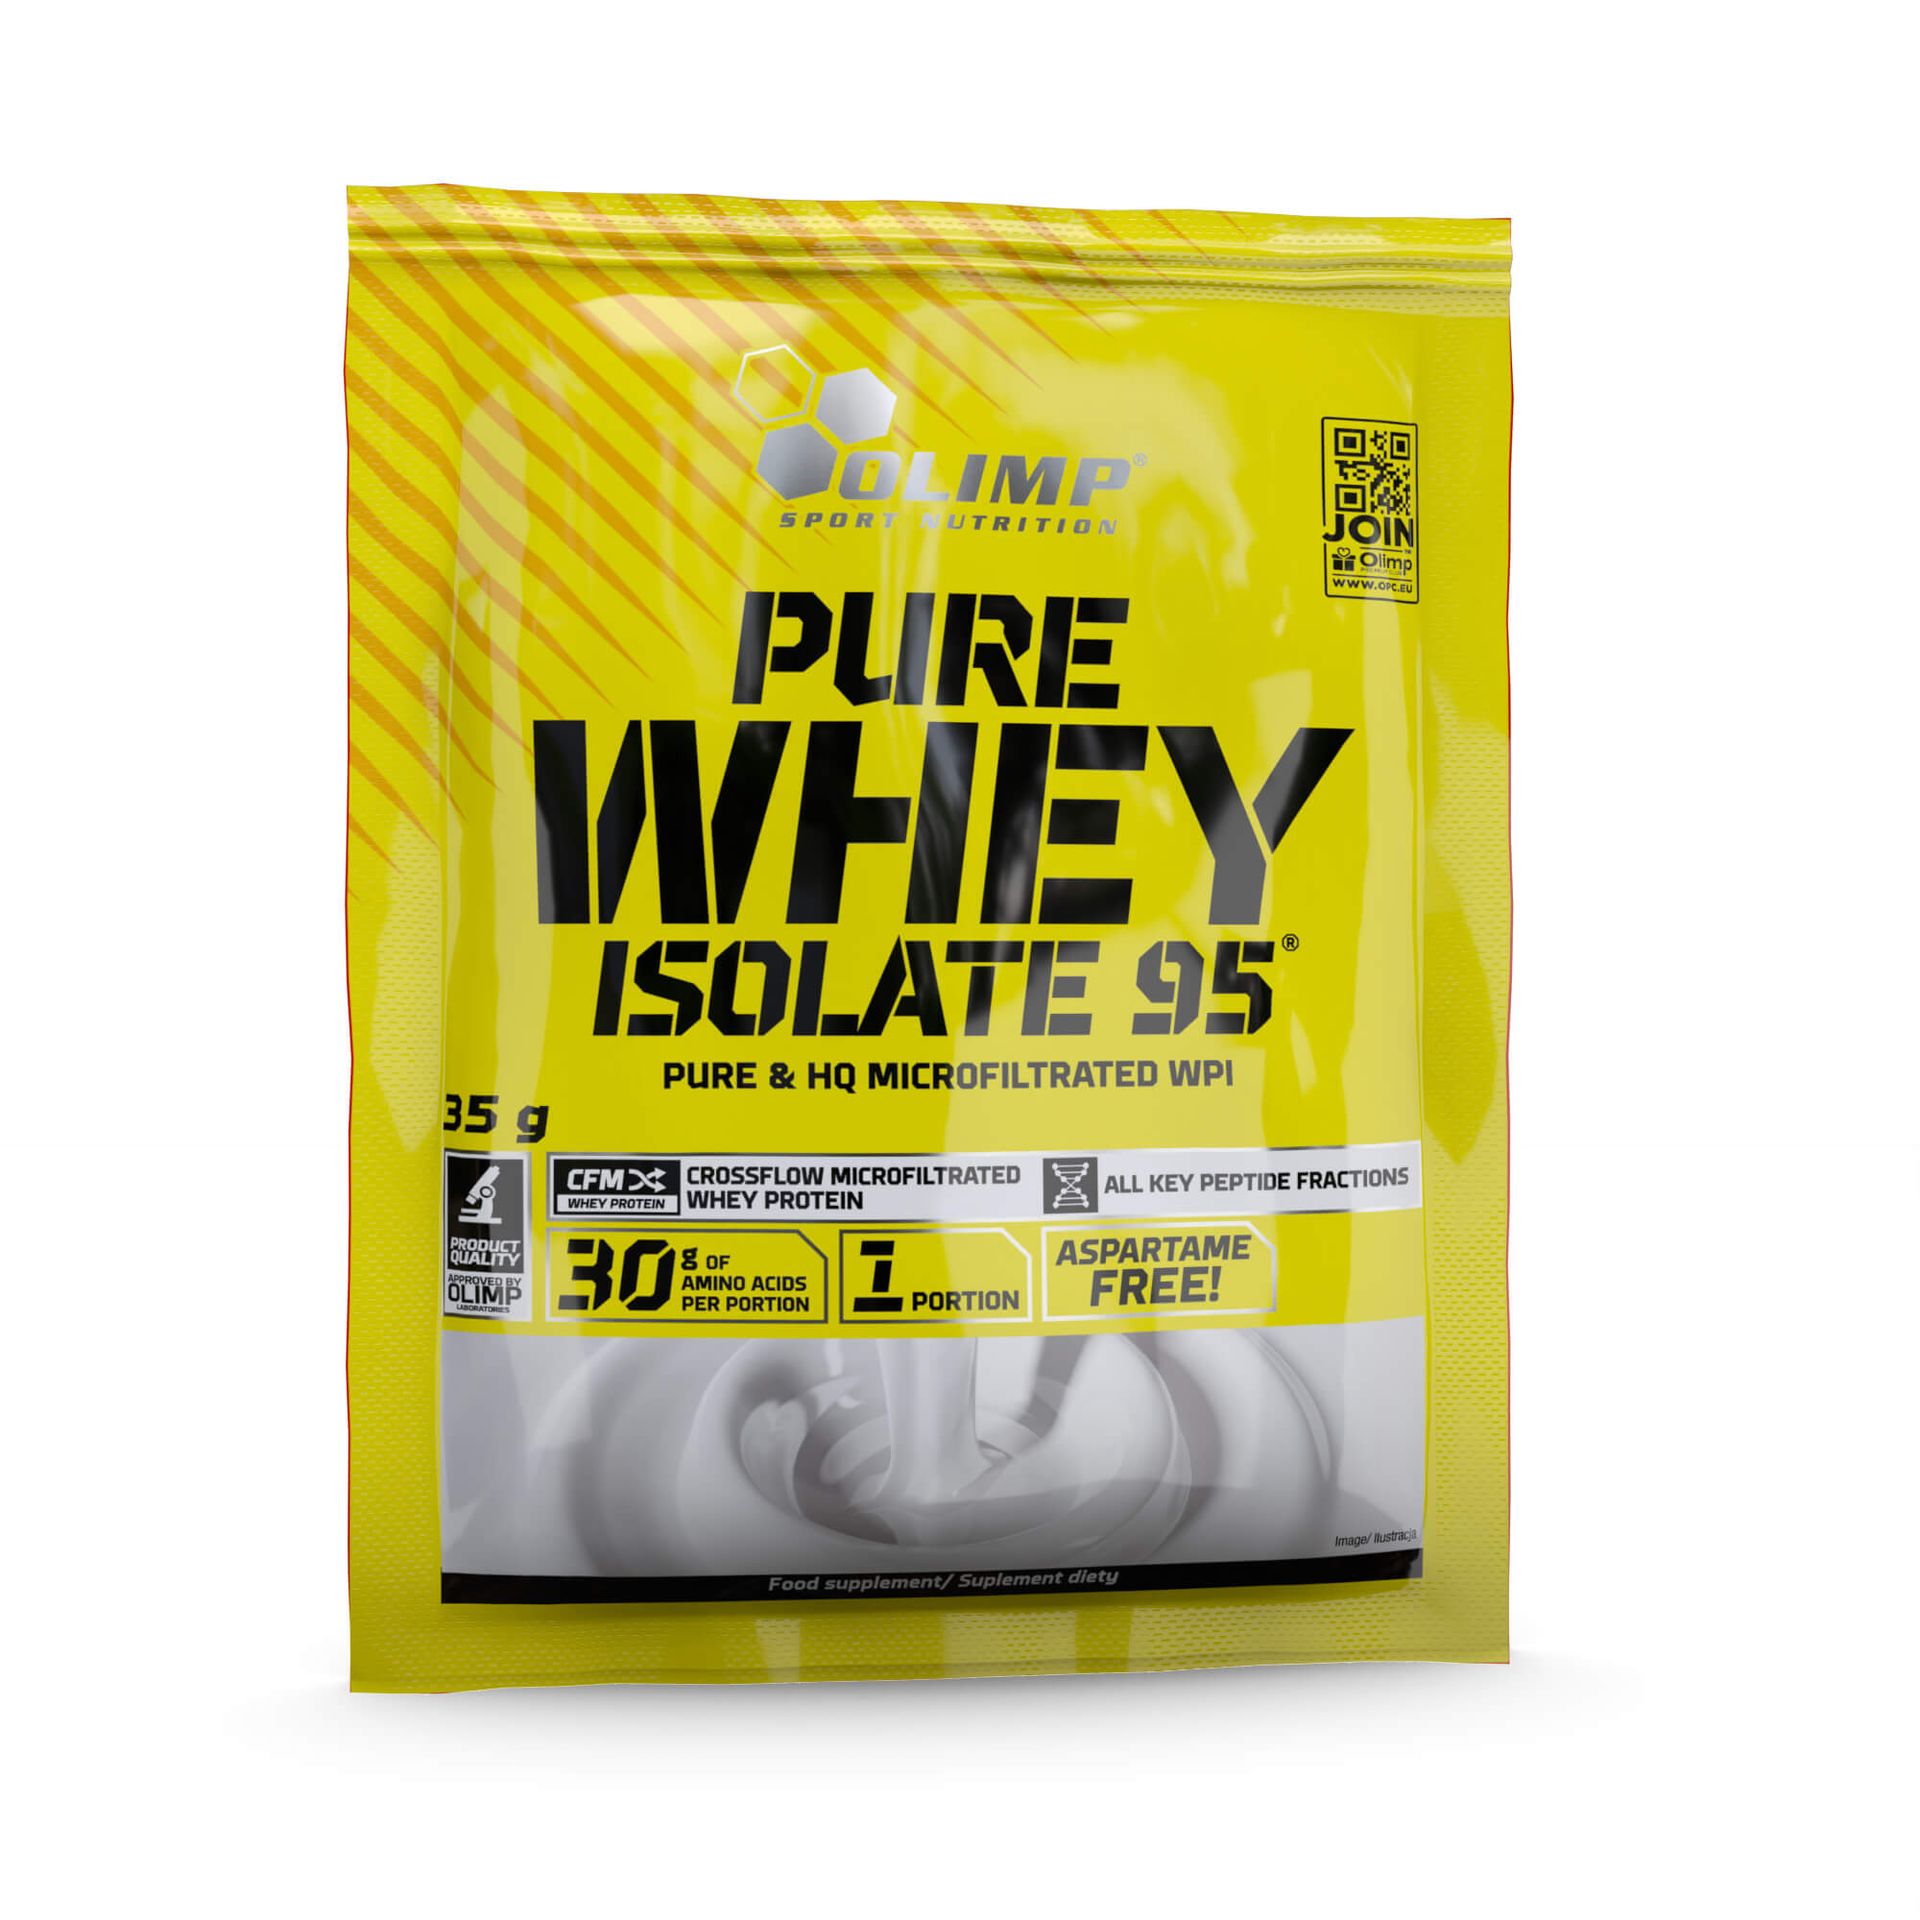 Olimp Pure Whey Isolate 95® - 35 g-Vanilla